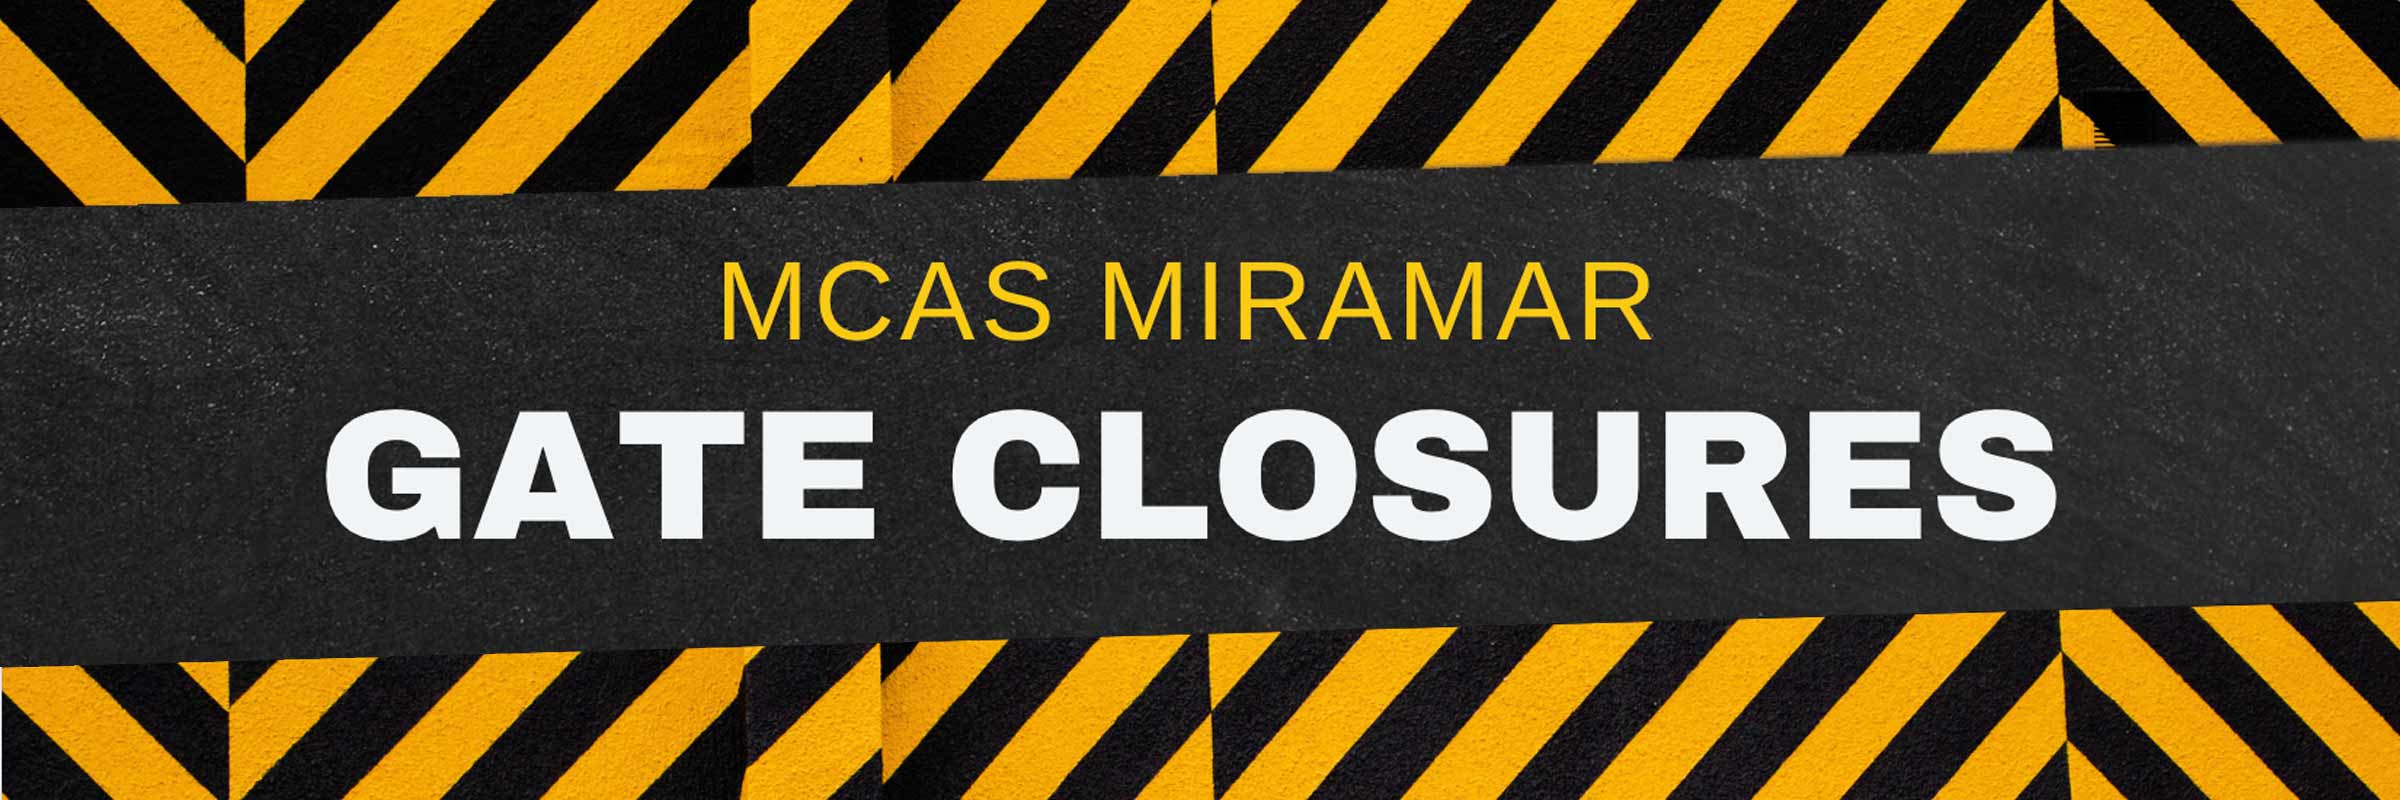 MCAS-Miramar-Gate-Closures-2400x800.jpg